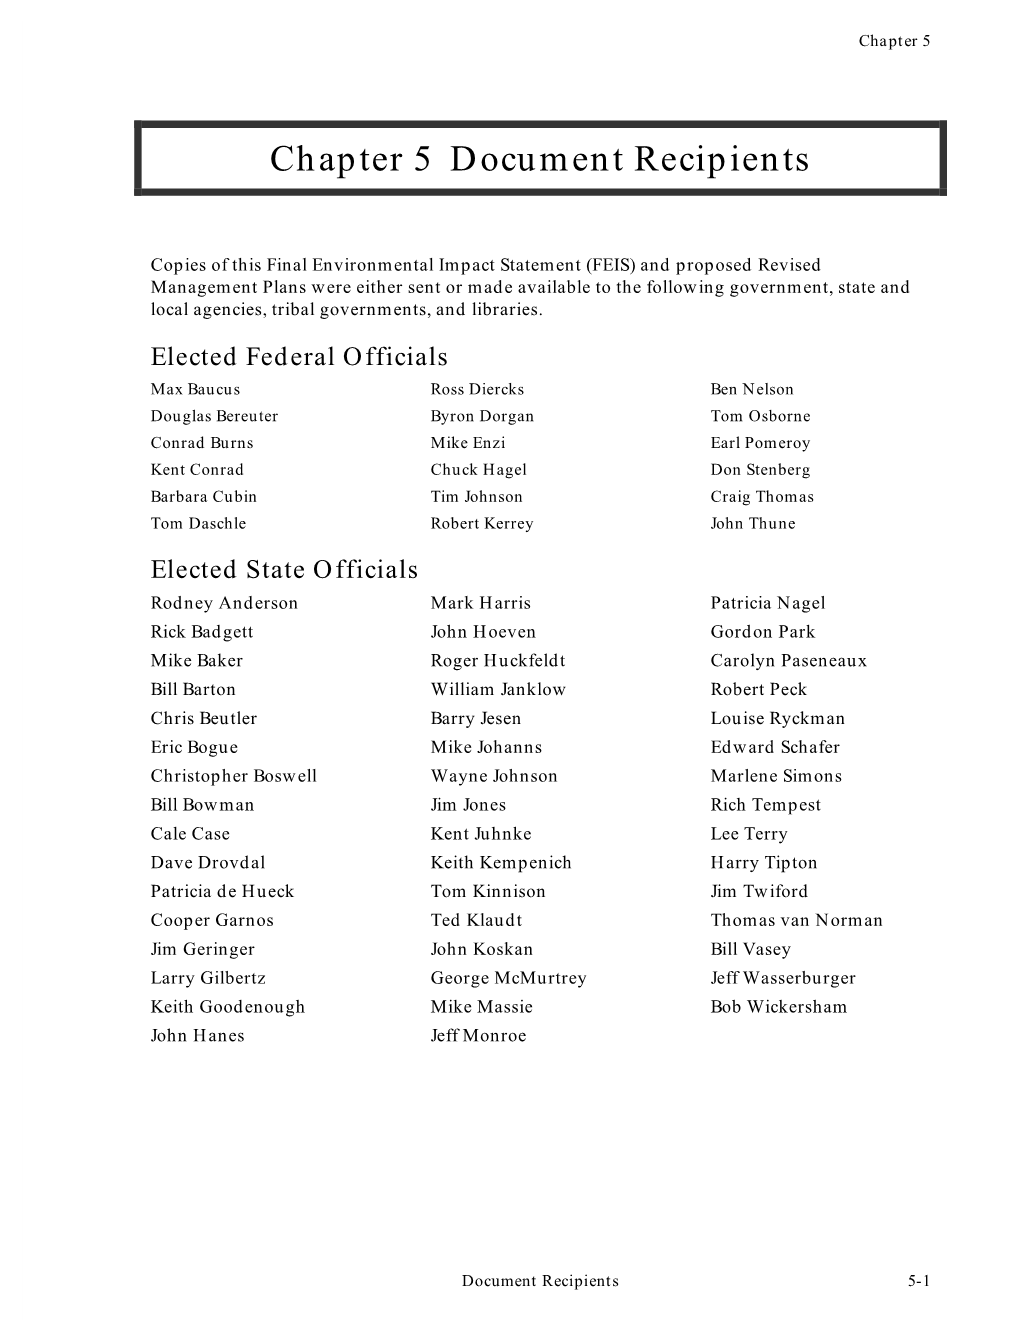 Chapter 5 Document Recipients